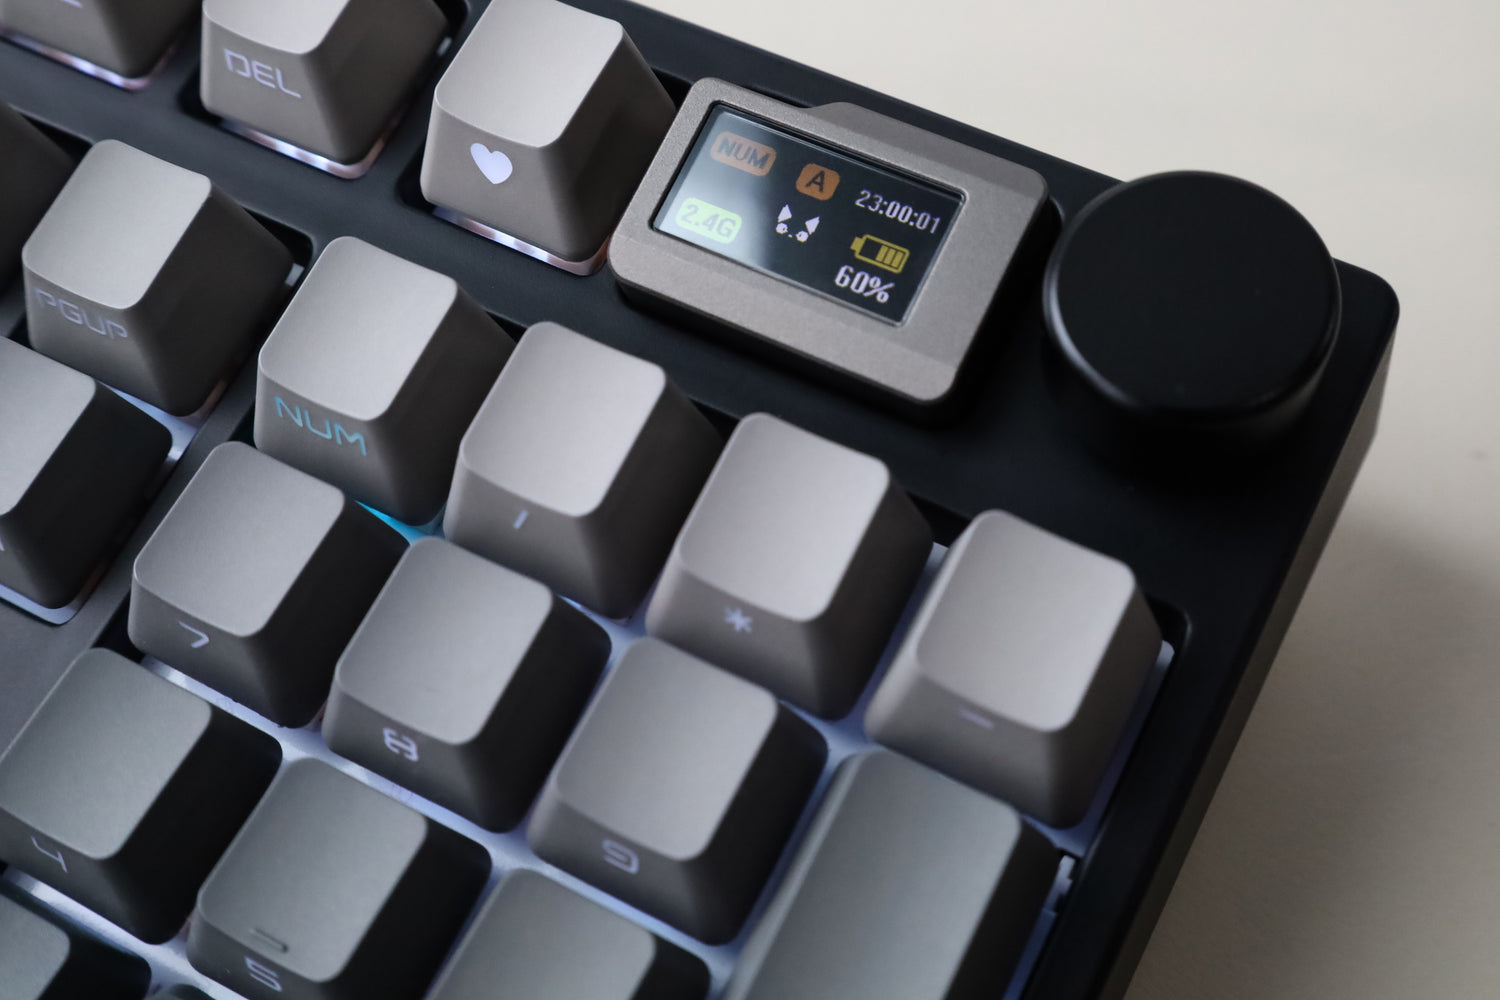 keydous nj98 keyboard black screen and knob